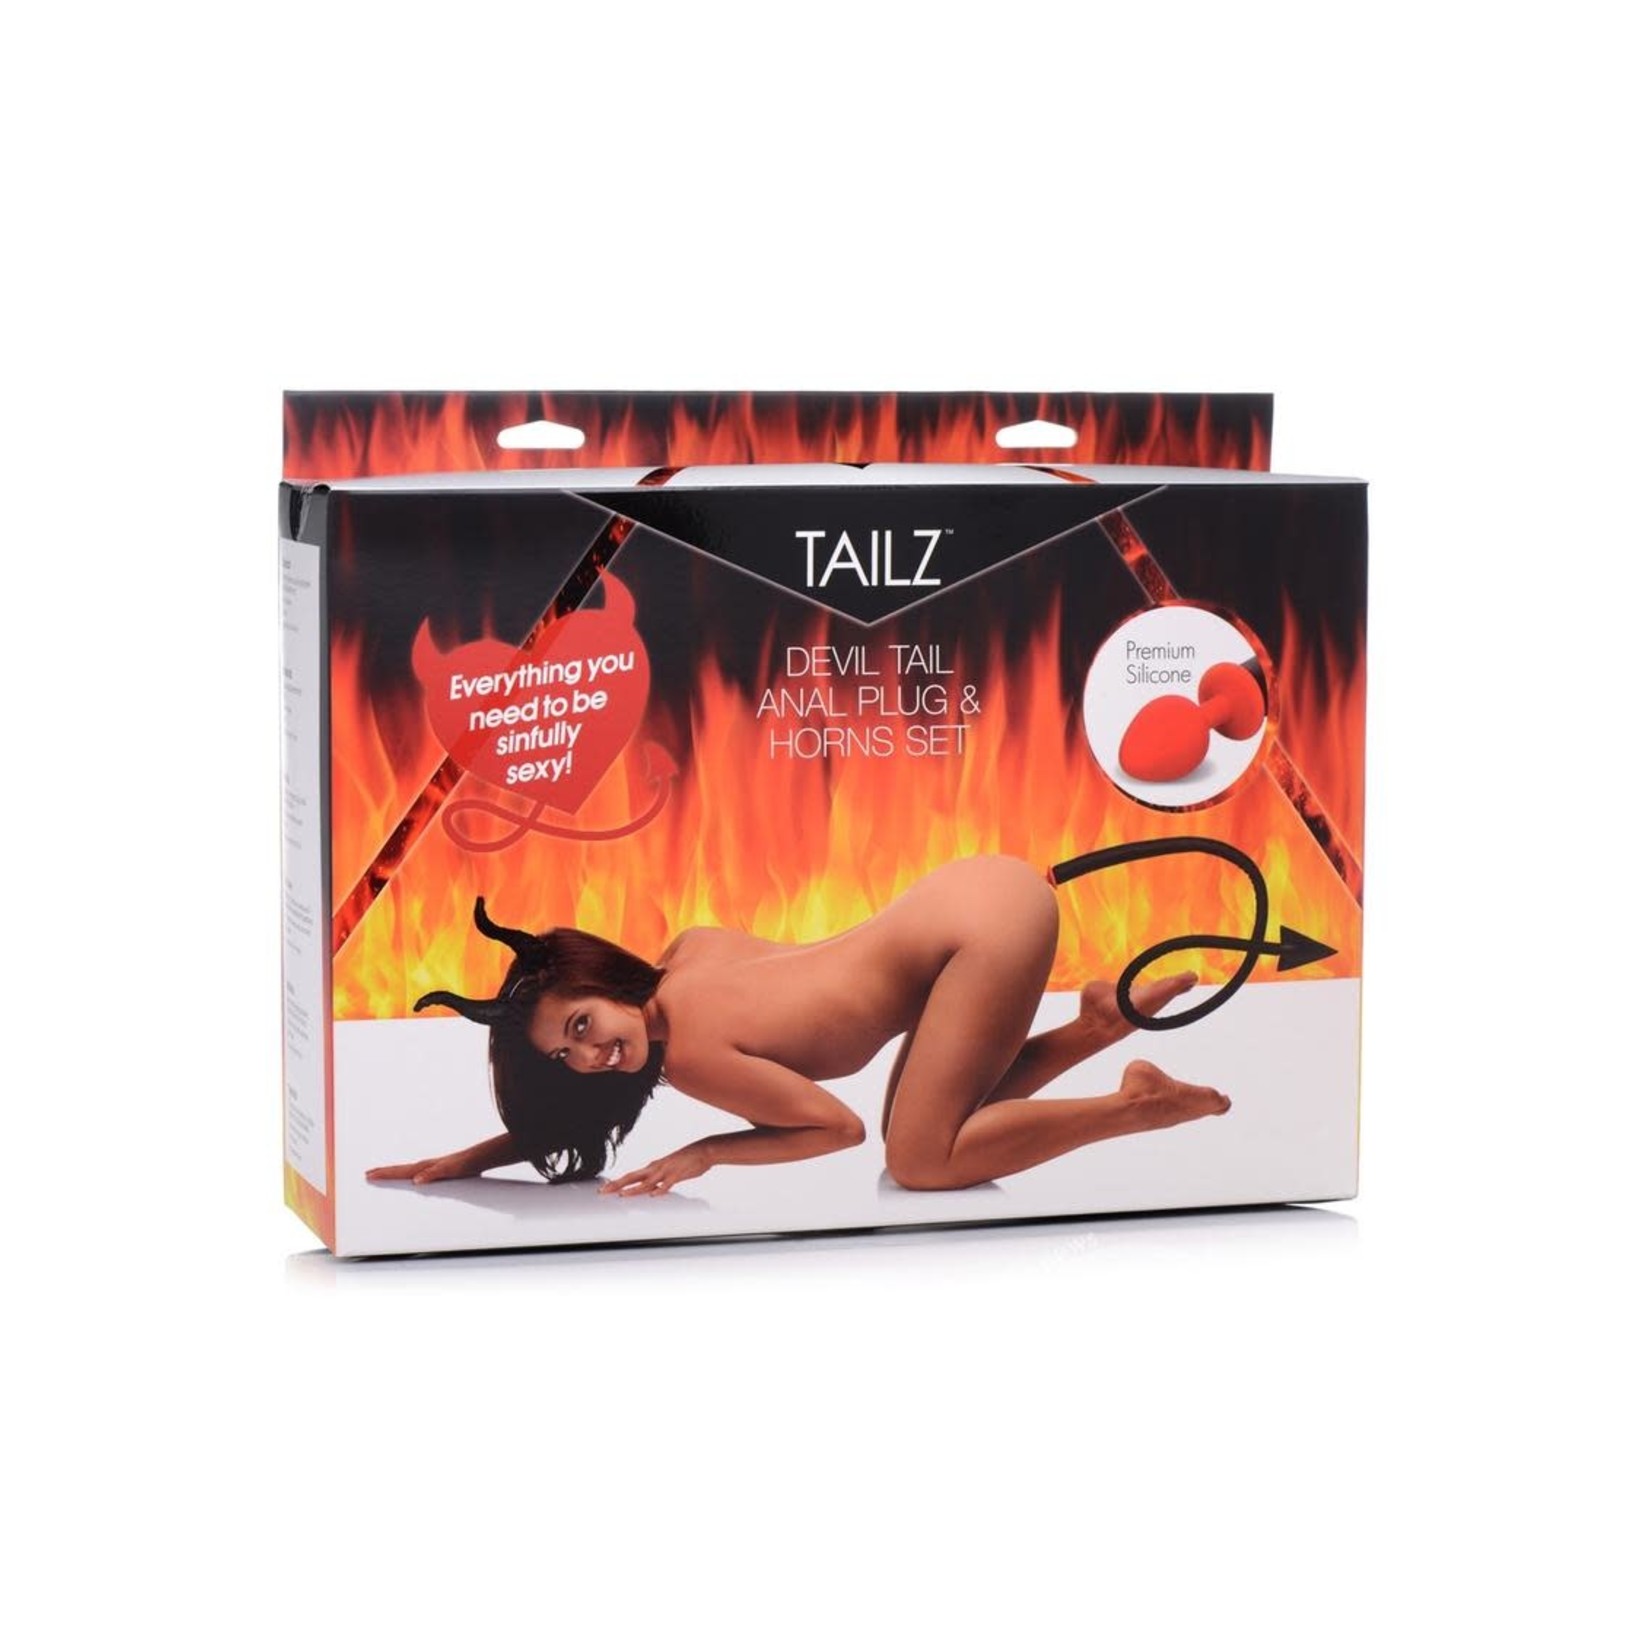 Tailz Devil Tail Anal Plug And Horns Set 2pc - Black